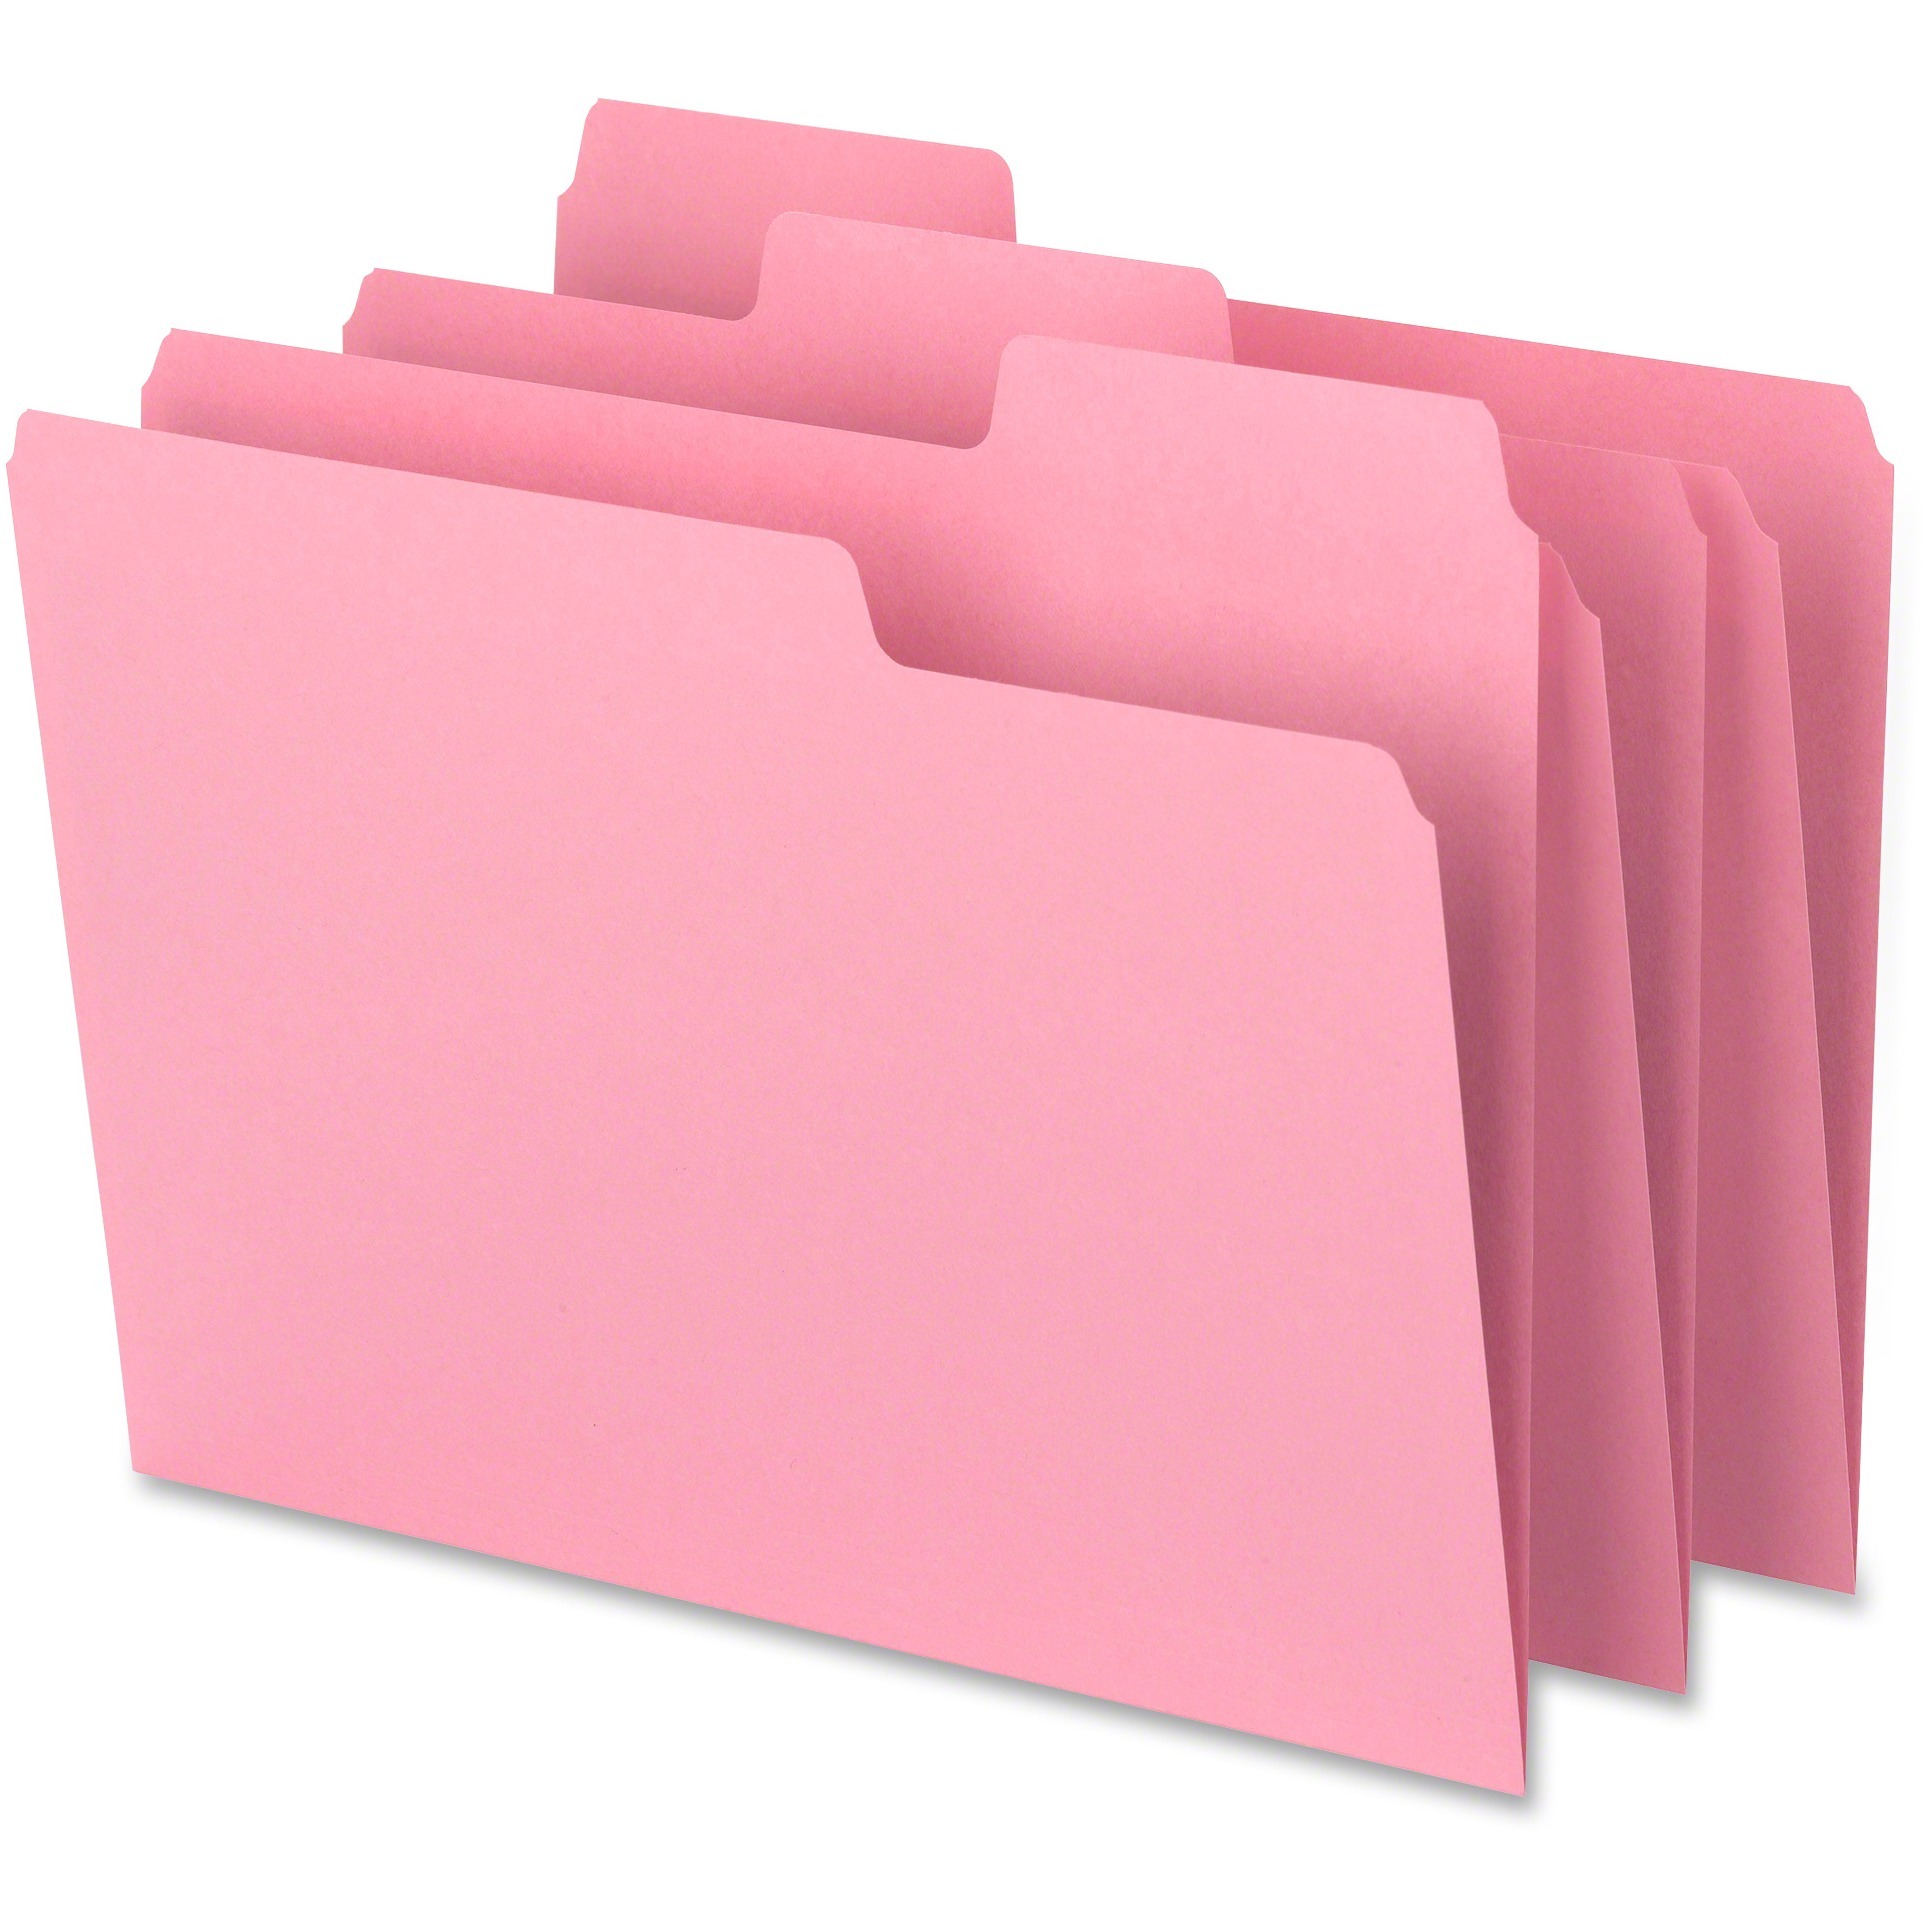 Smead SuperTab Breast Cancer Awareness - File folder - expanding - for Letter - tabbed - pink (pack of 6) - image 2 of 5